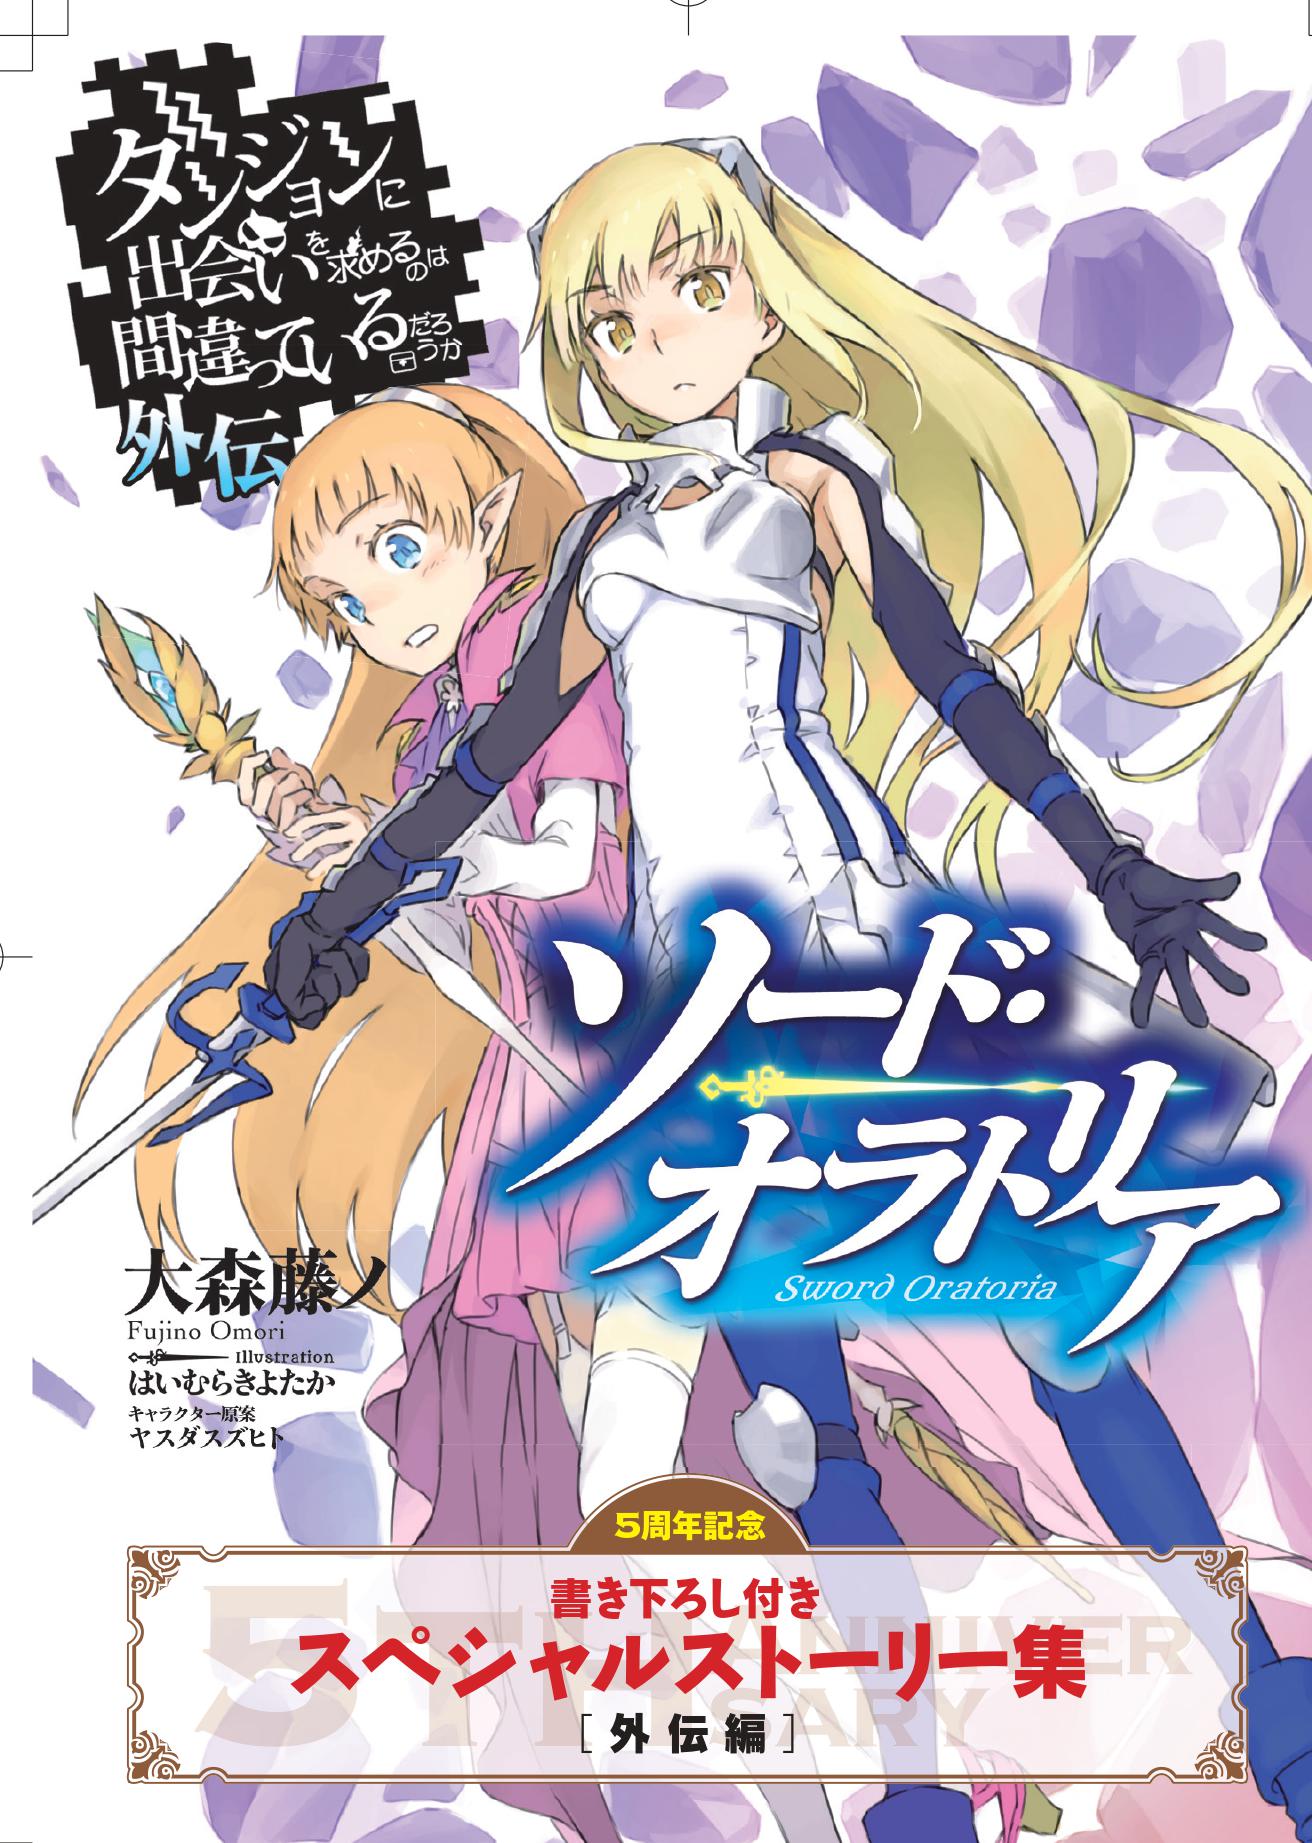 DanMachi Manga Volume 5, DanMachi Wiki